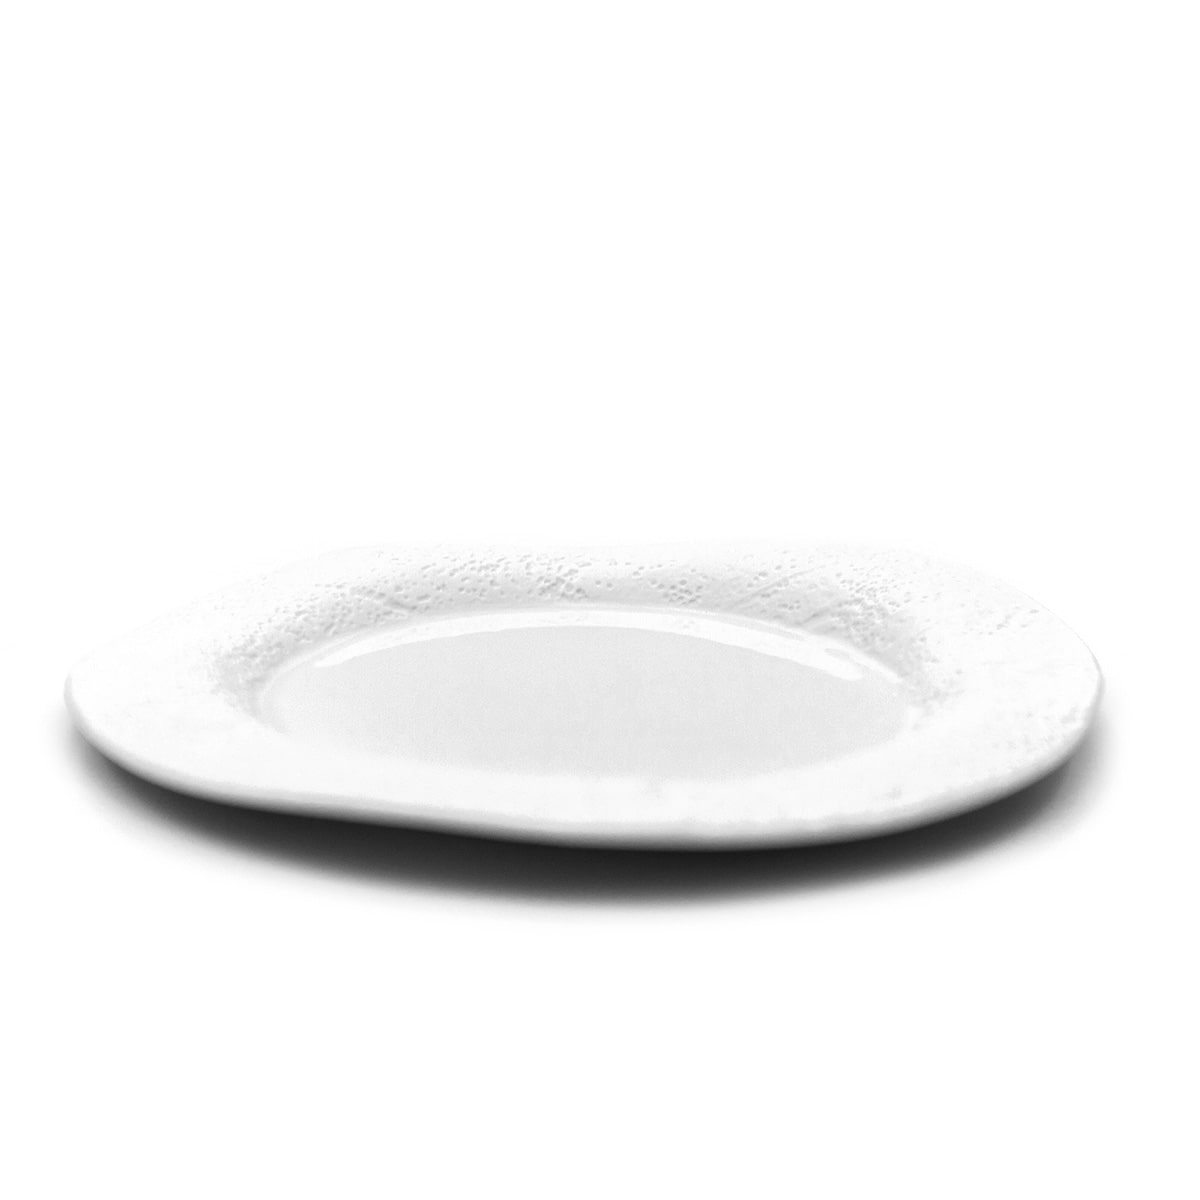 PORDAMSATaffoni Plate 포르담사 타포니 플레이트 (Ø20)MADE IN SPAIN